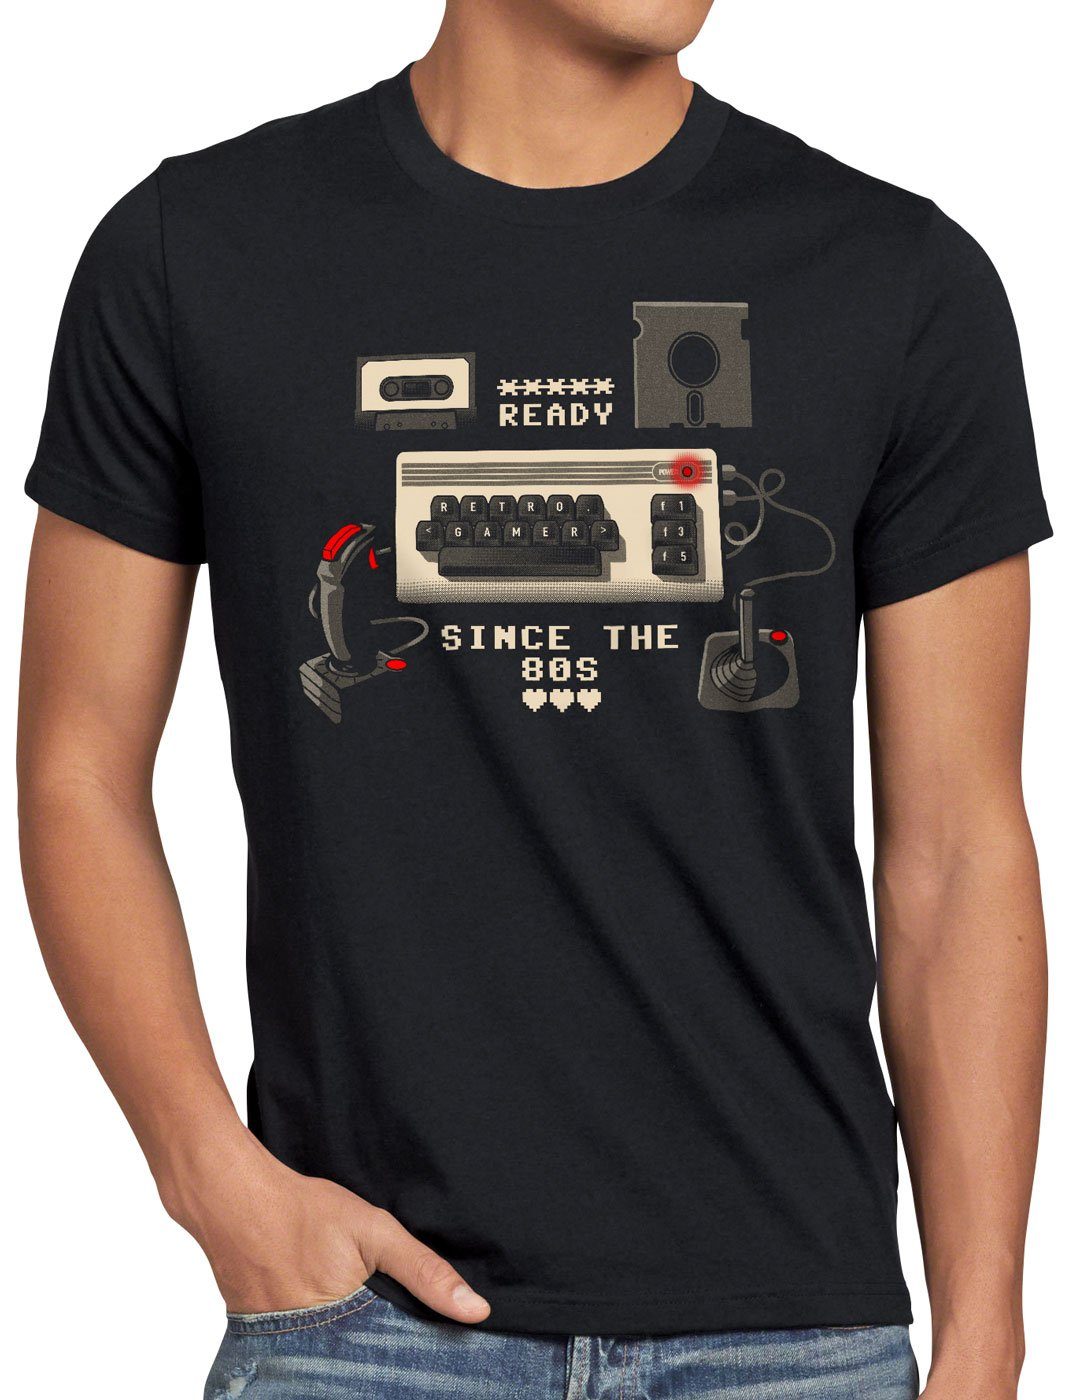 T-Shirt heimcomputer Love Herren classic C64 style3 Print-Shirt